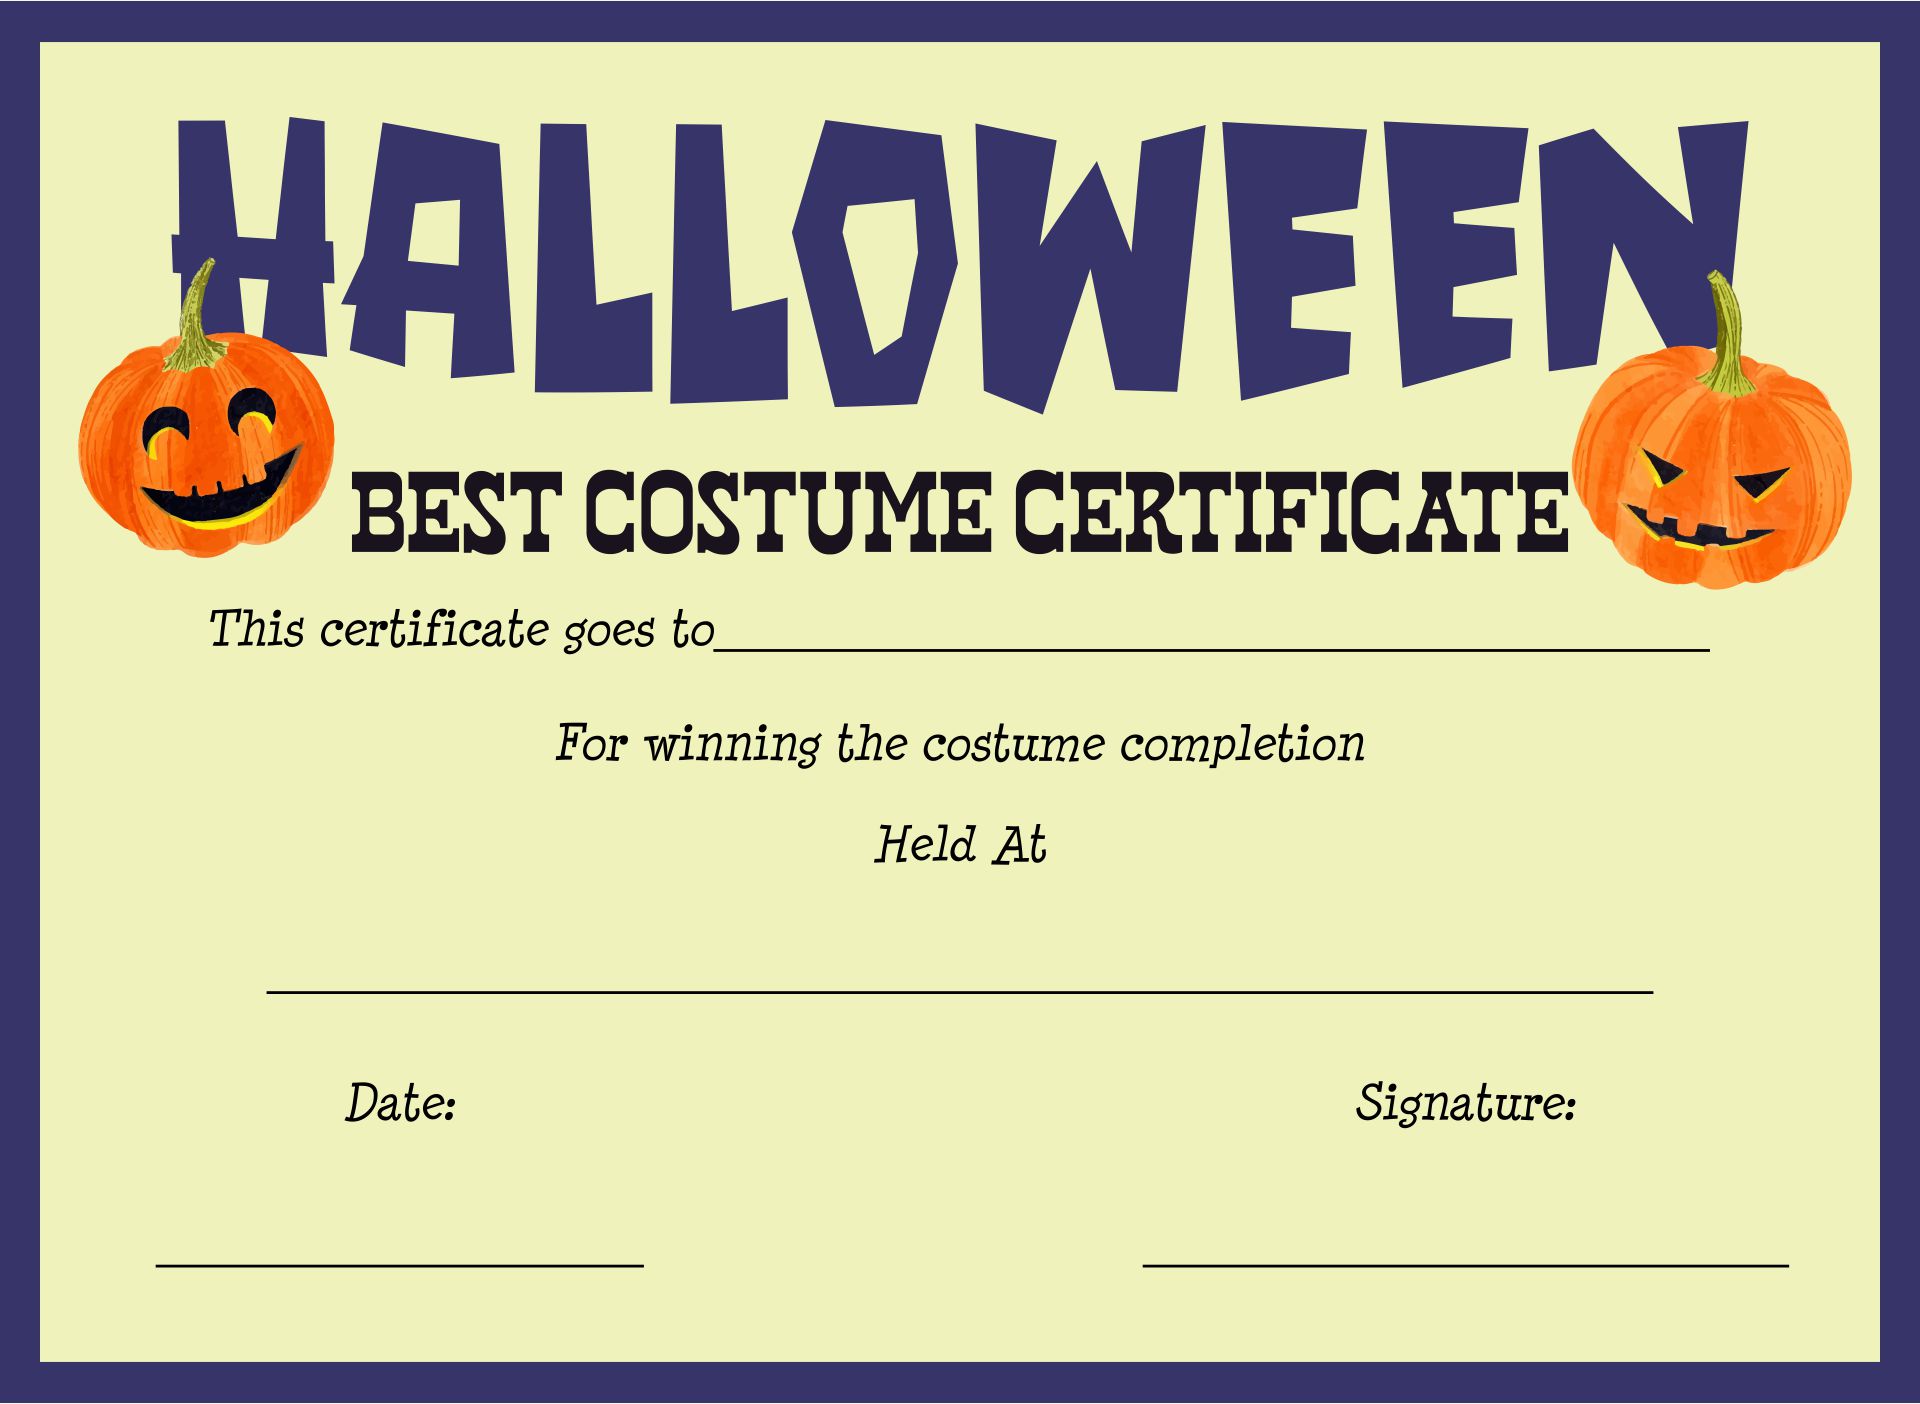 15 Best Halloween Costume Awards Printable PDF for Free at Printablee